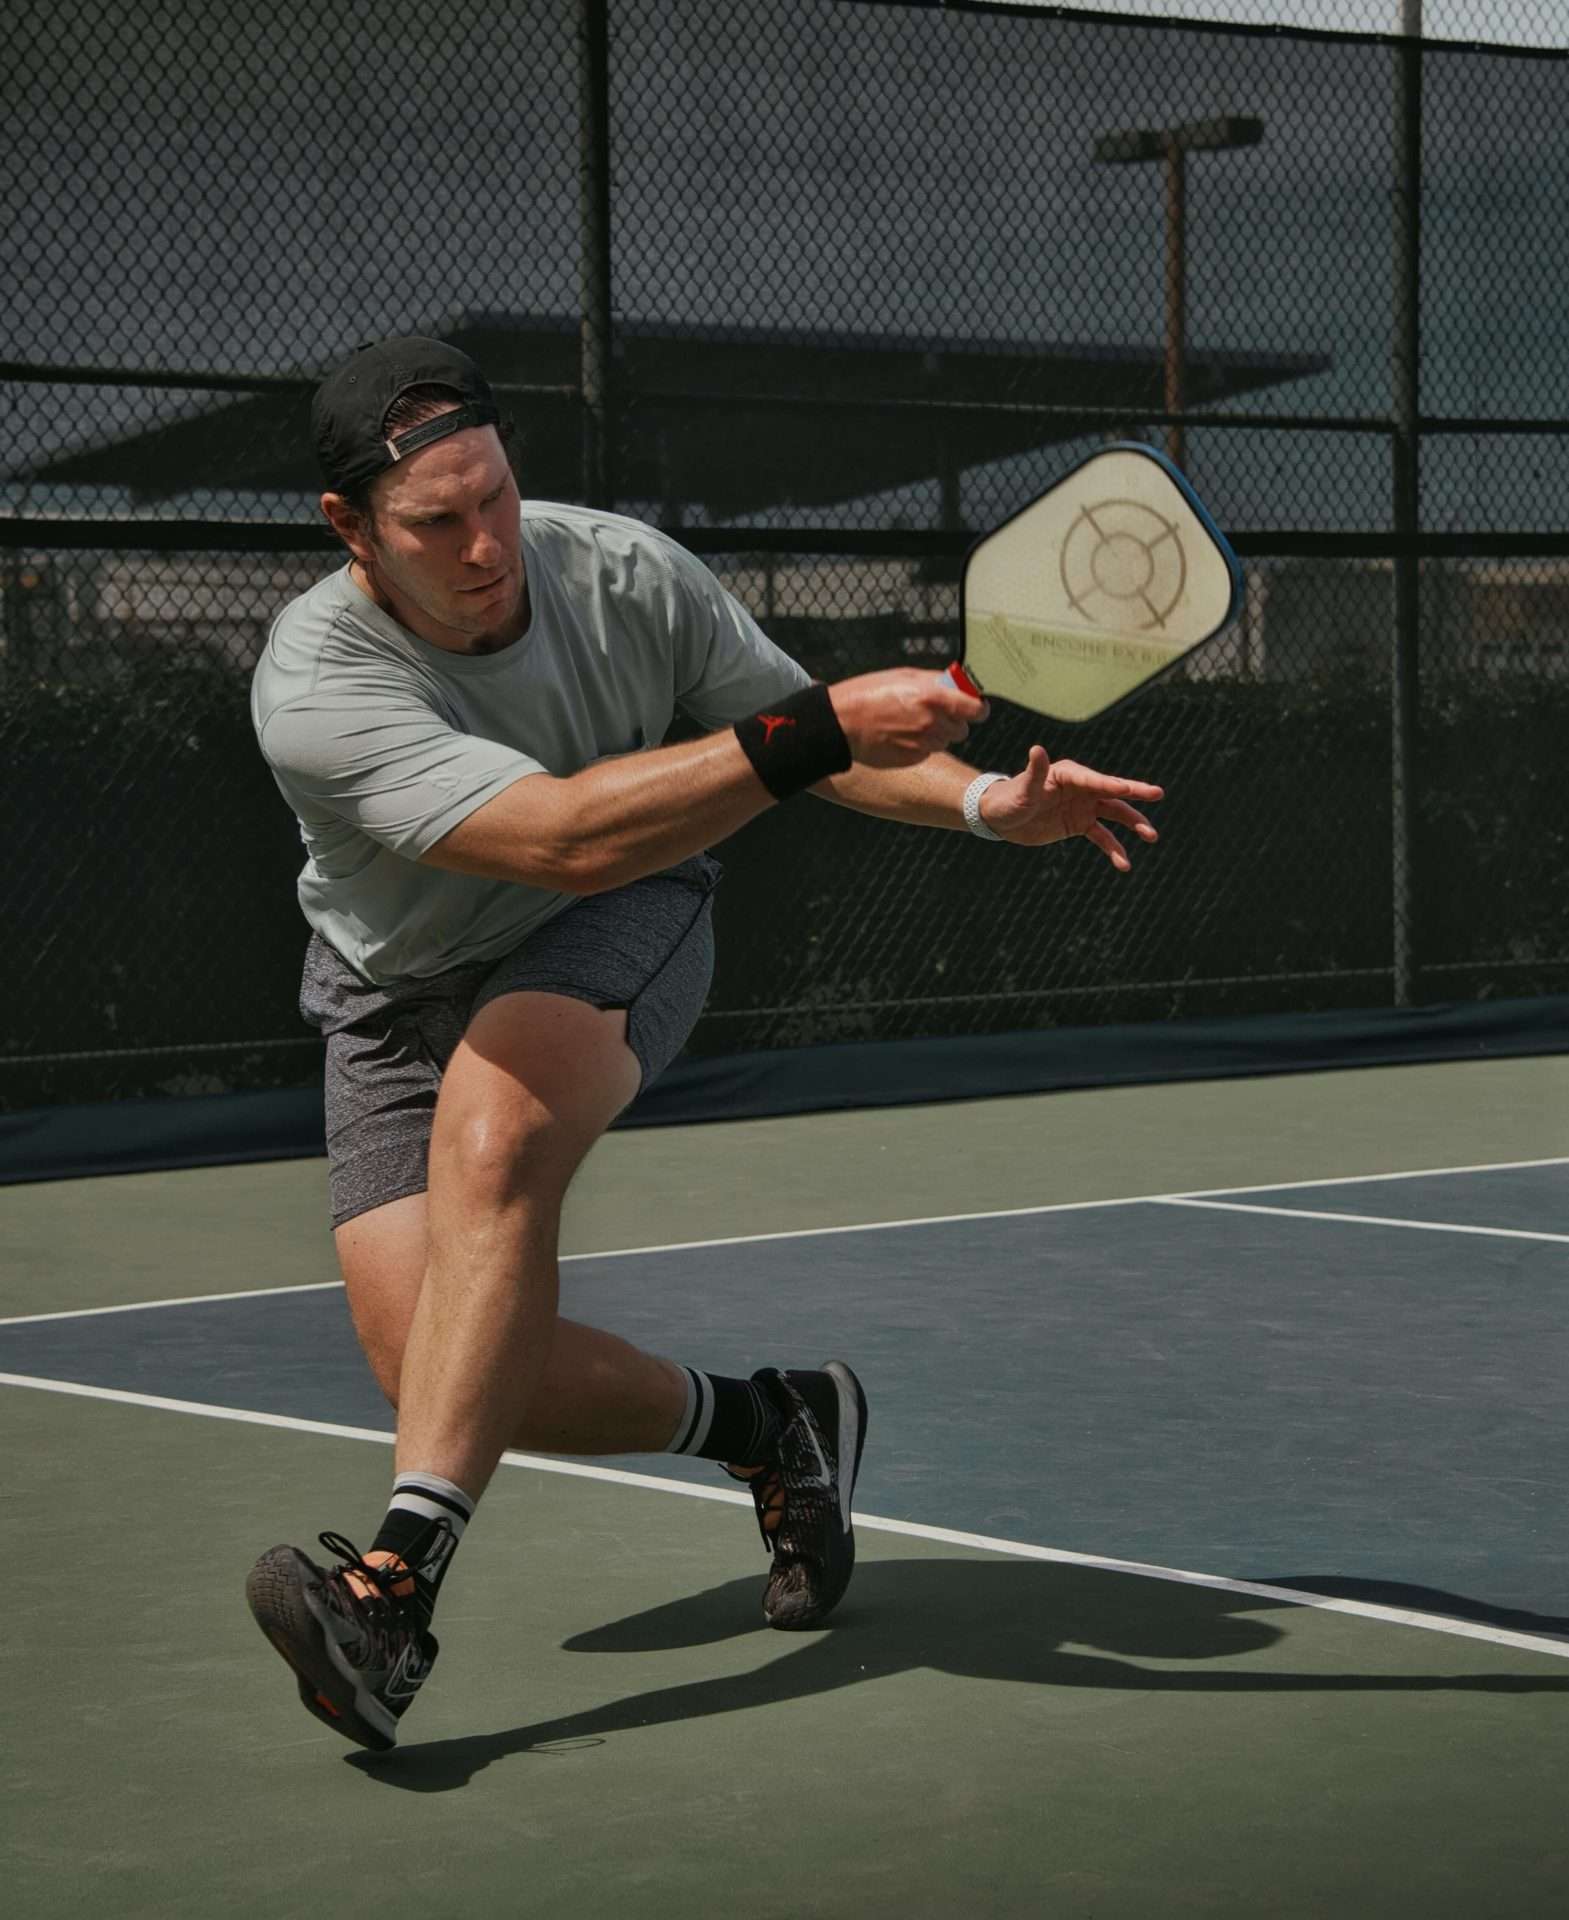 man playing pickleball, shooting the ball, holding pickle ball racket